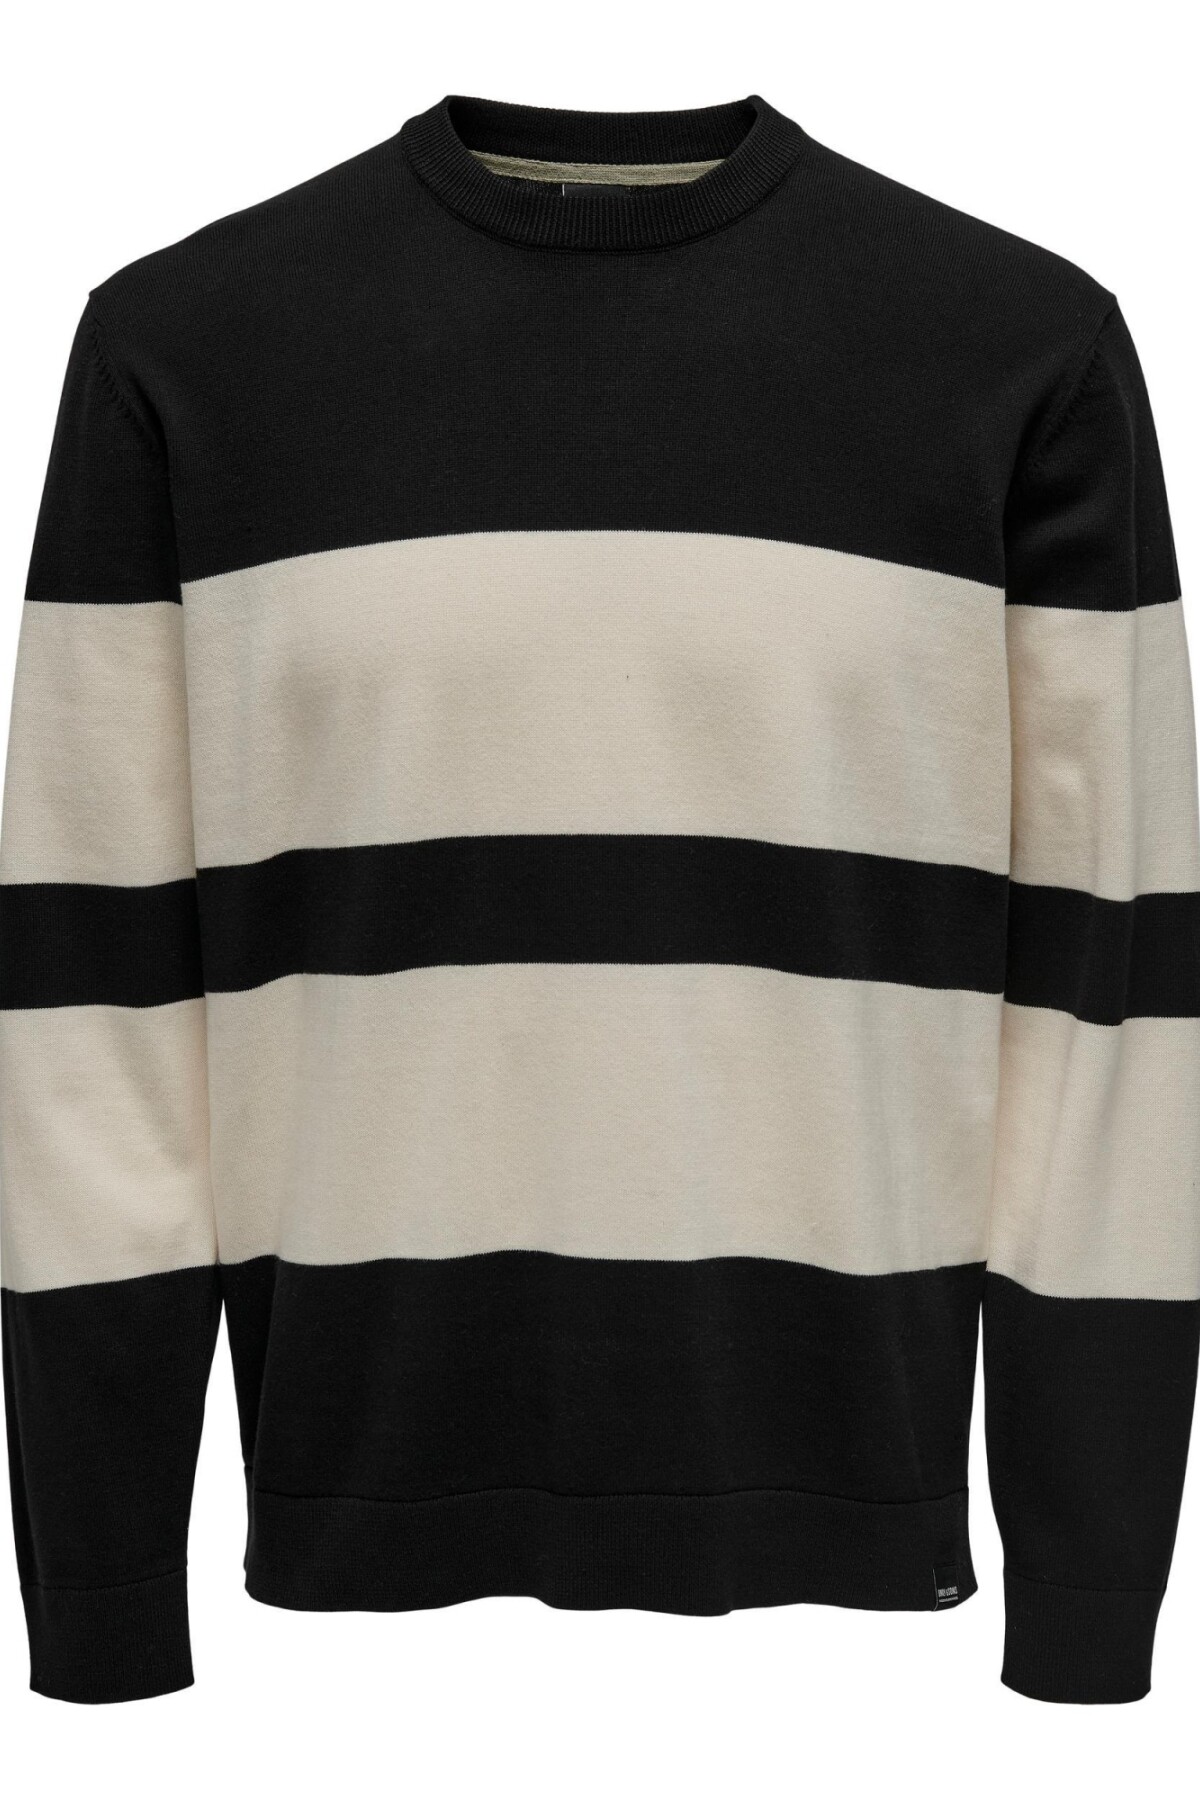 Sweater Scoby Black